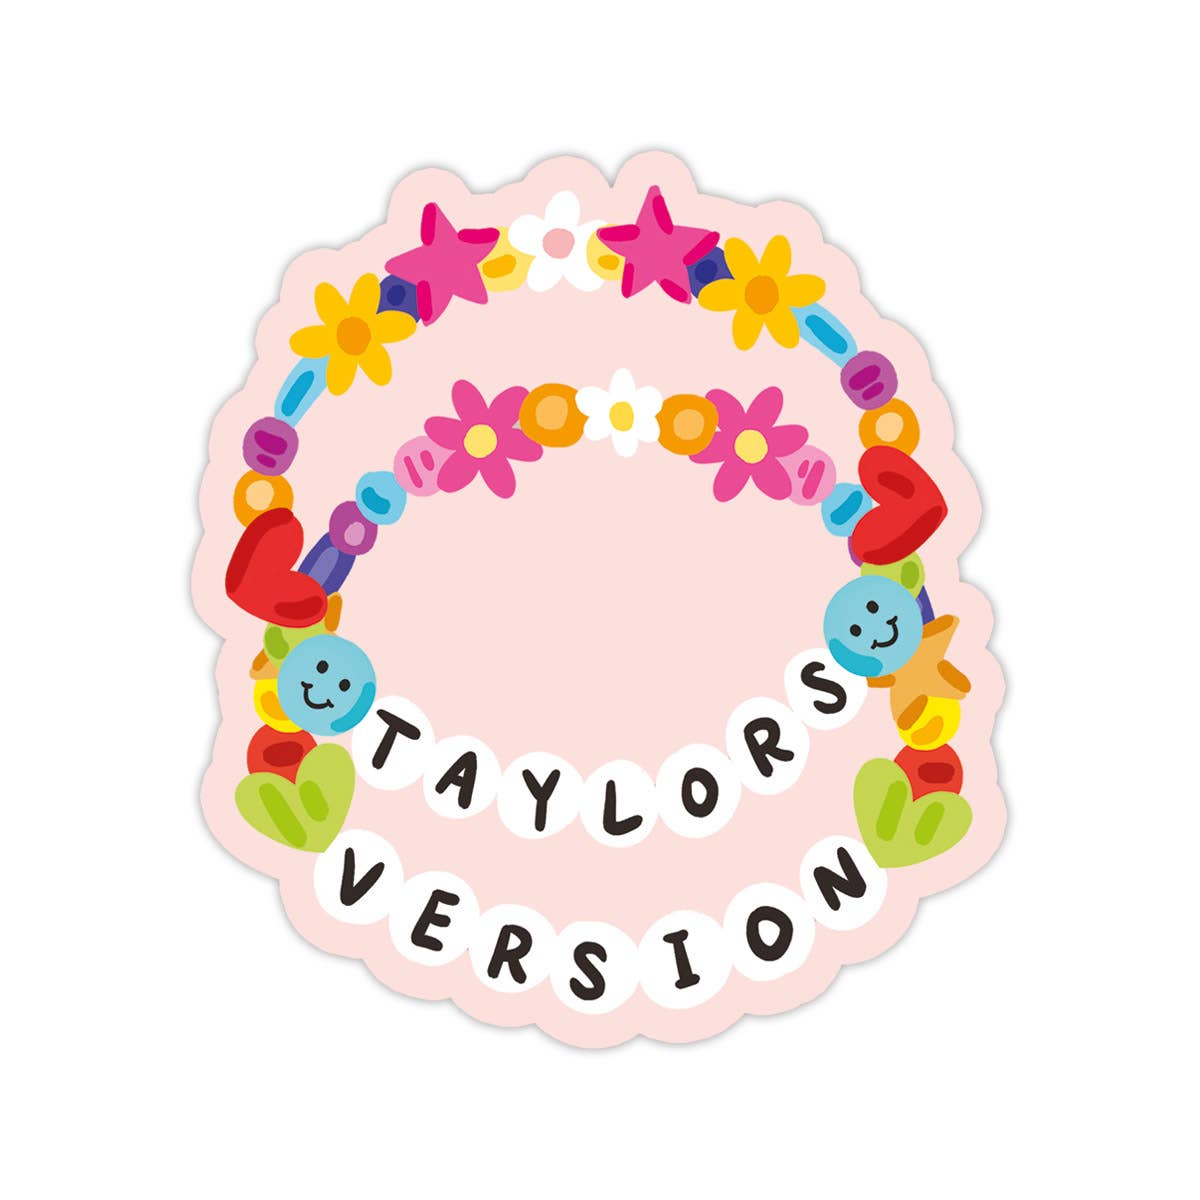 Taylor Swift Themed Friendship Bracelets 5 Pack